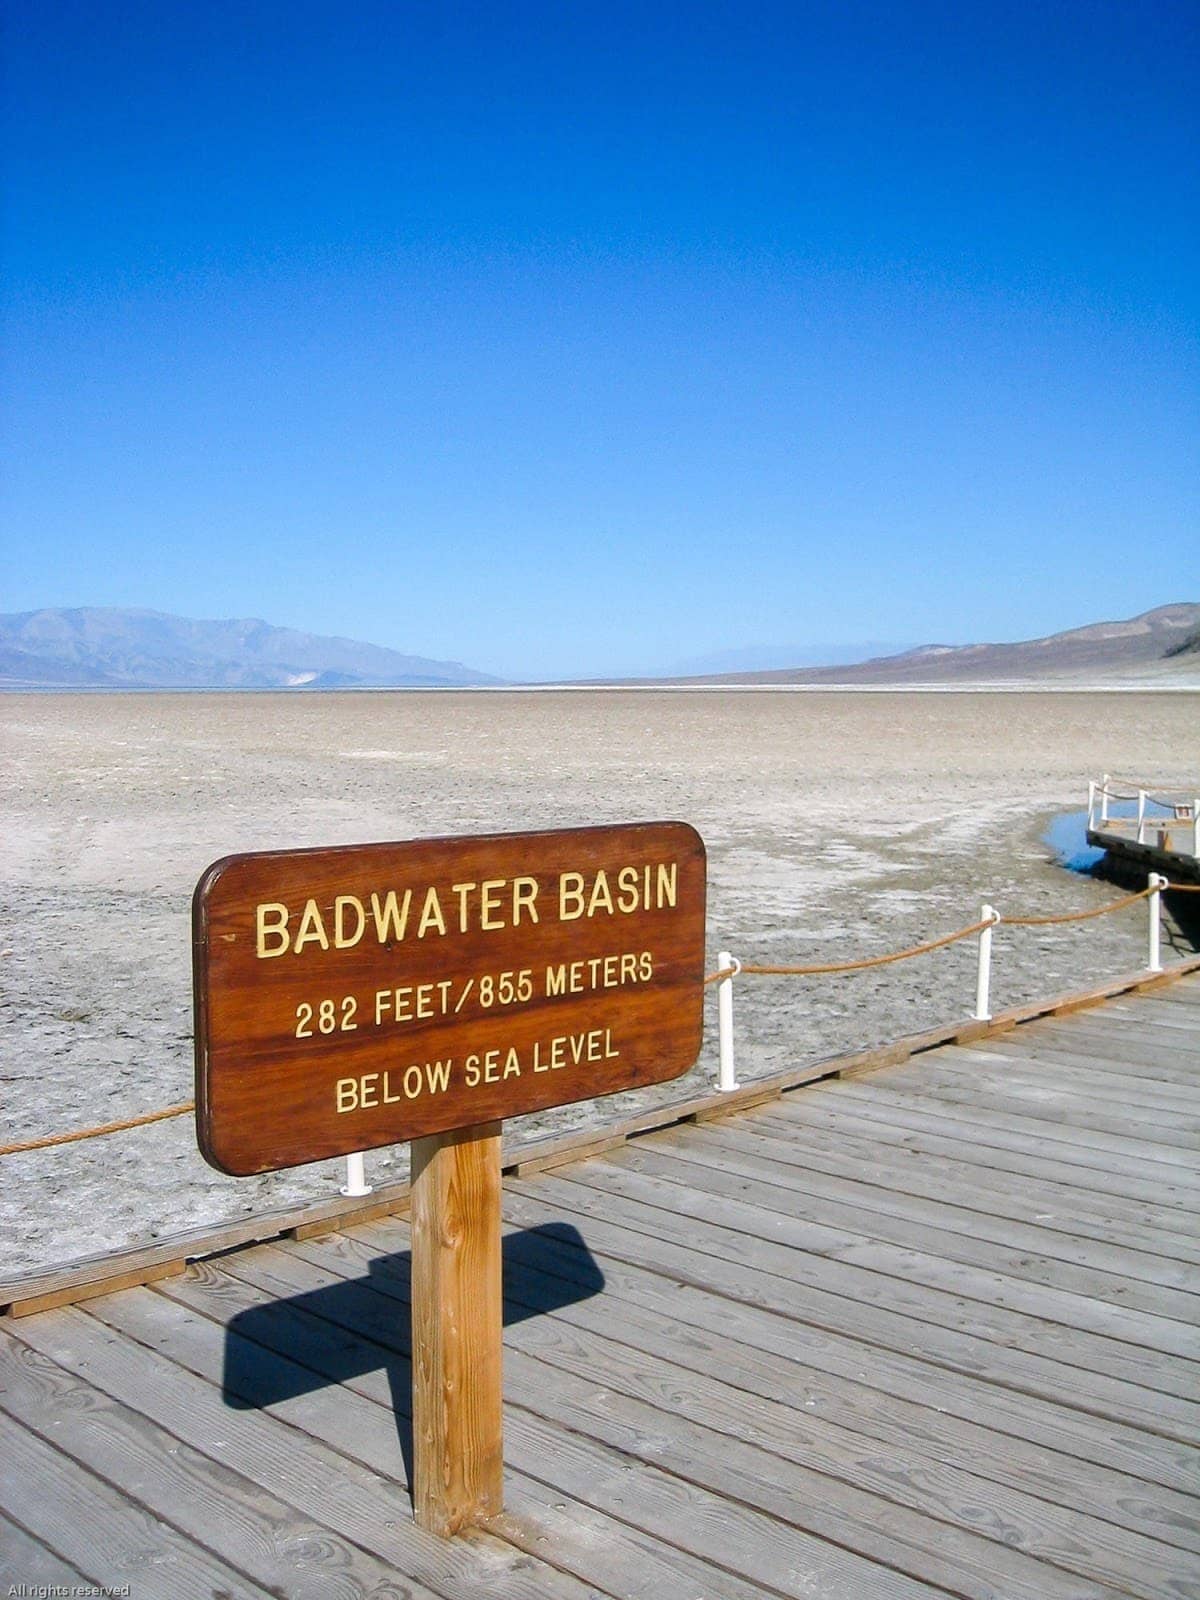 Badwater basin